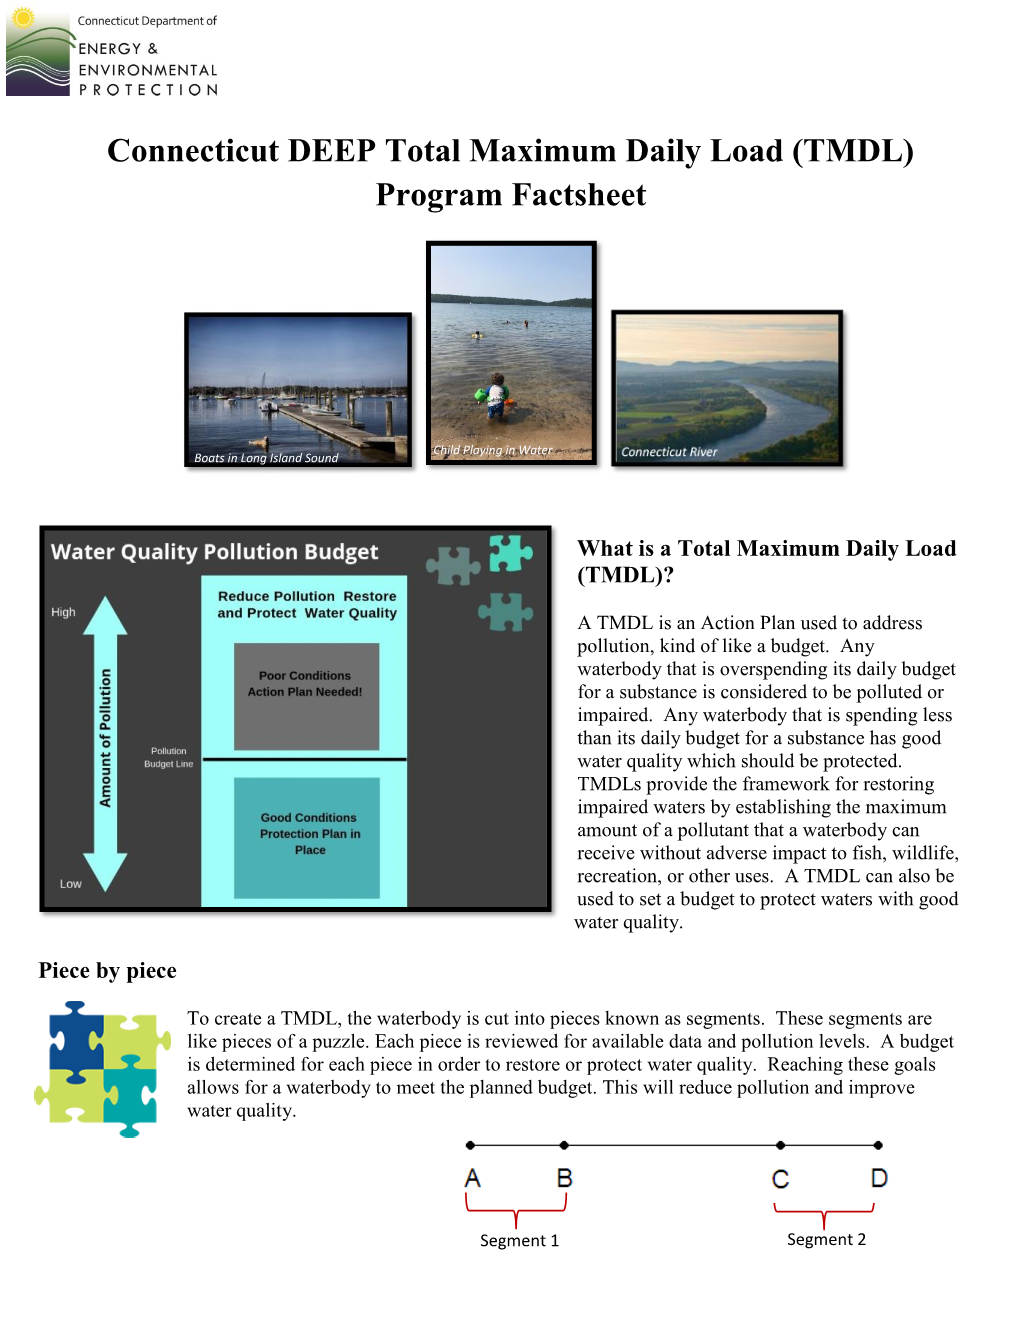 Connecticut DEEP Total Maximum Daily Load (TMDL) Program Factsheet